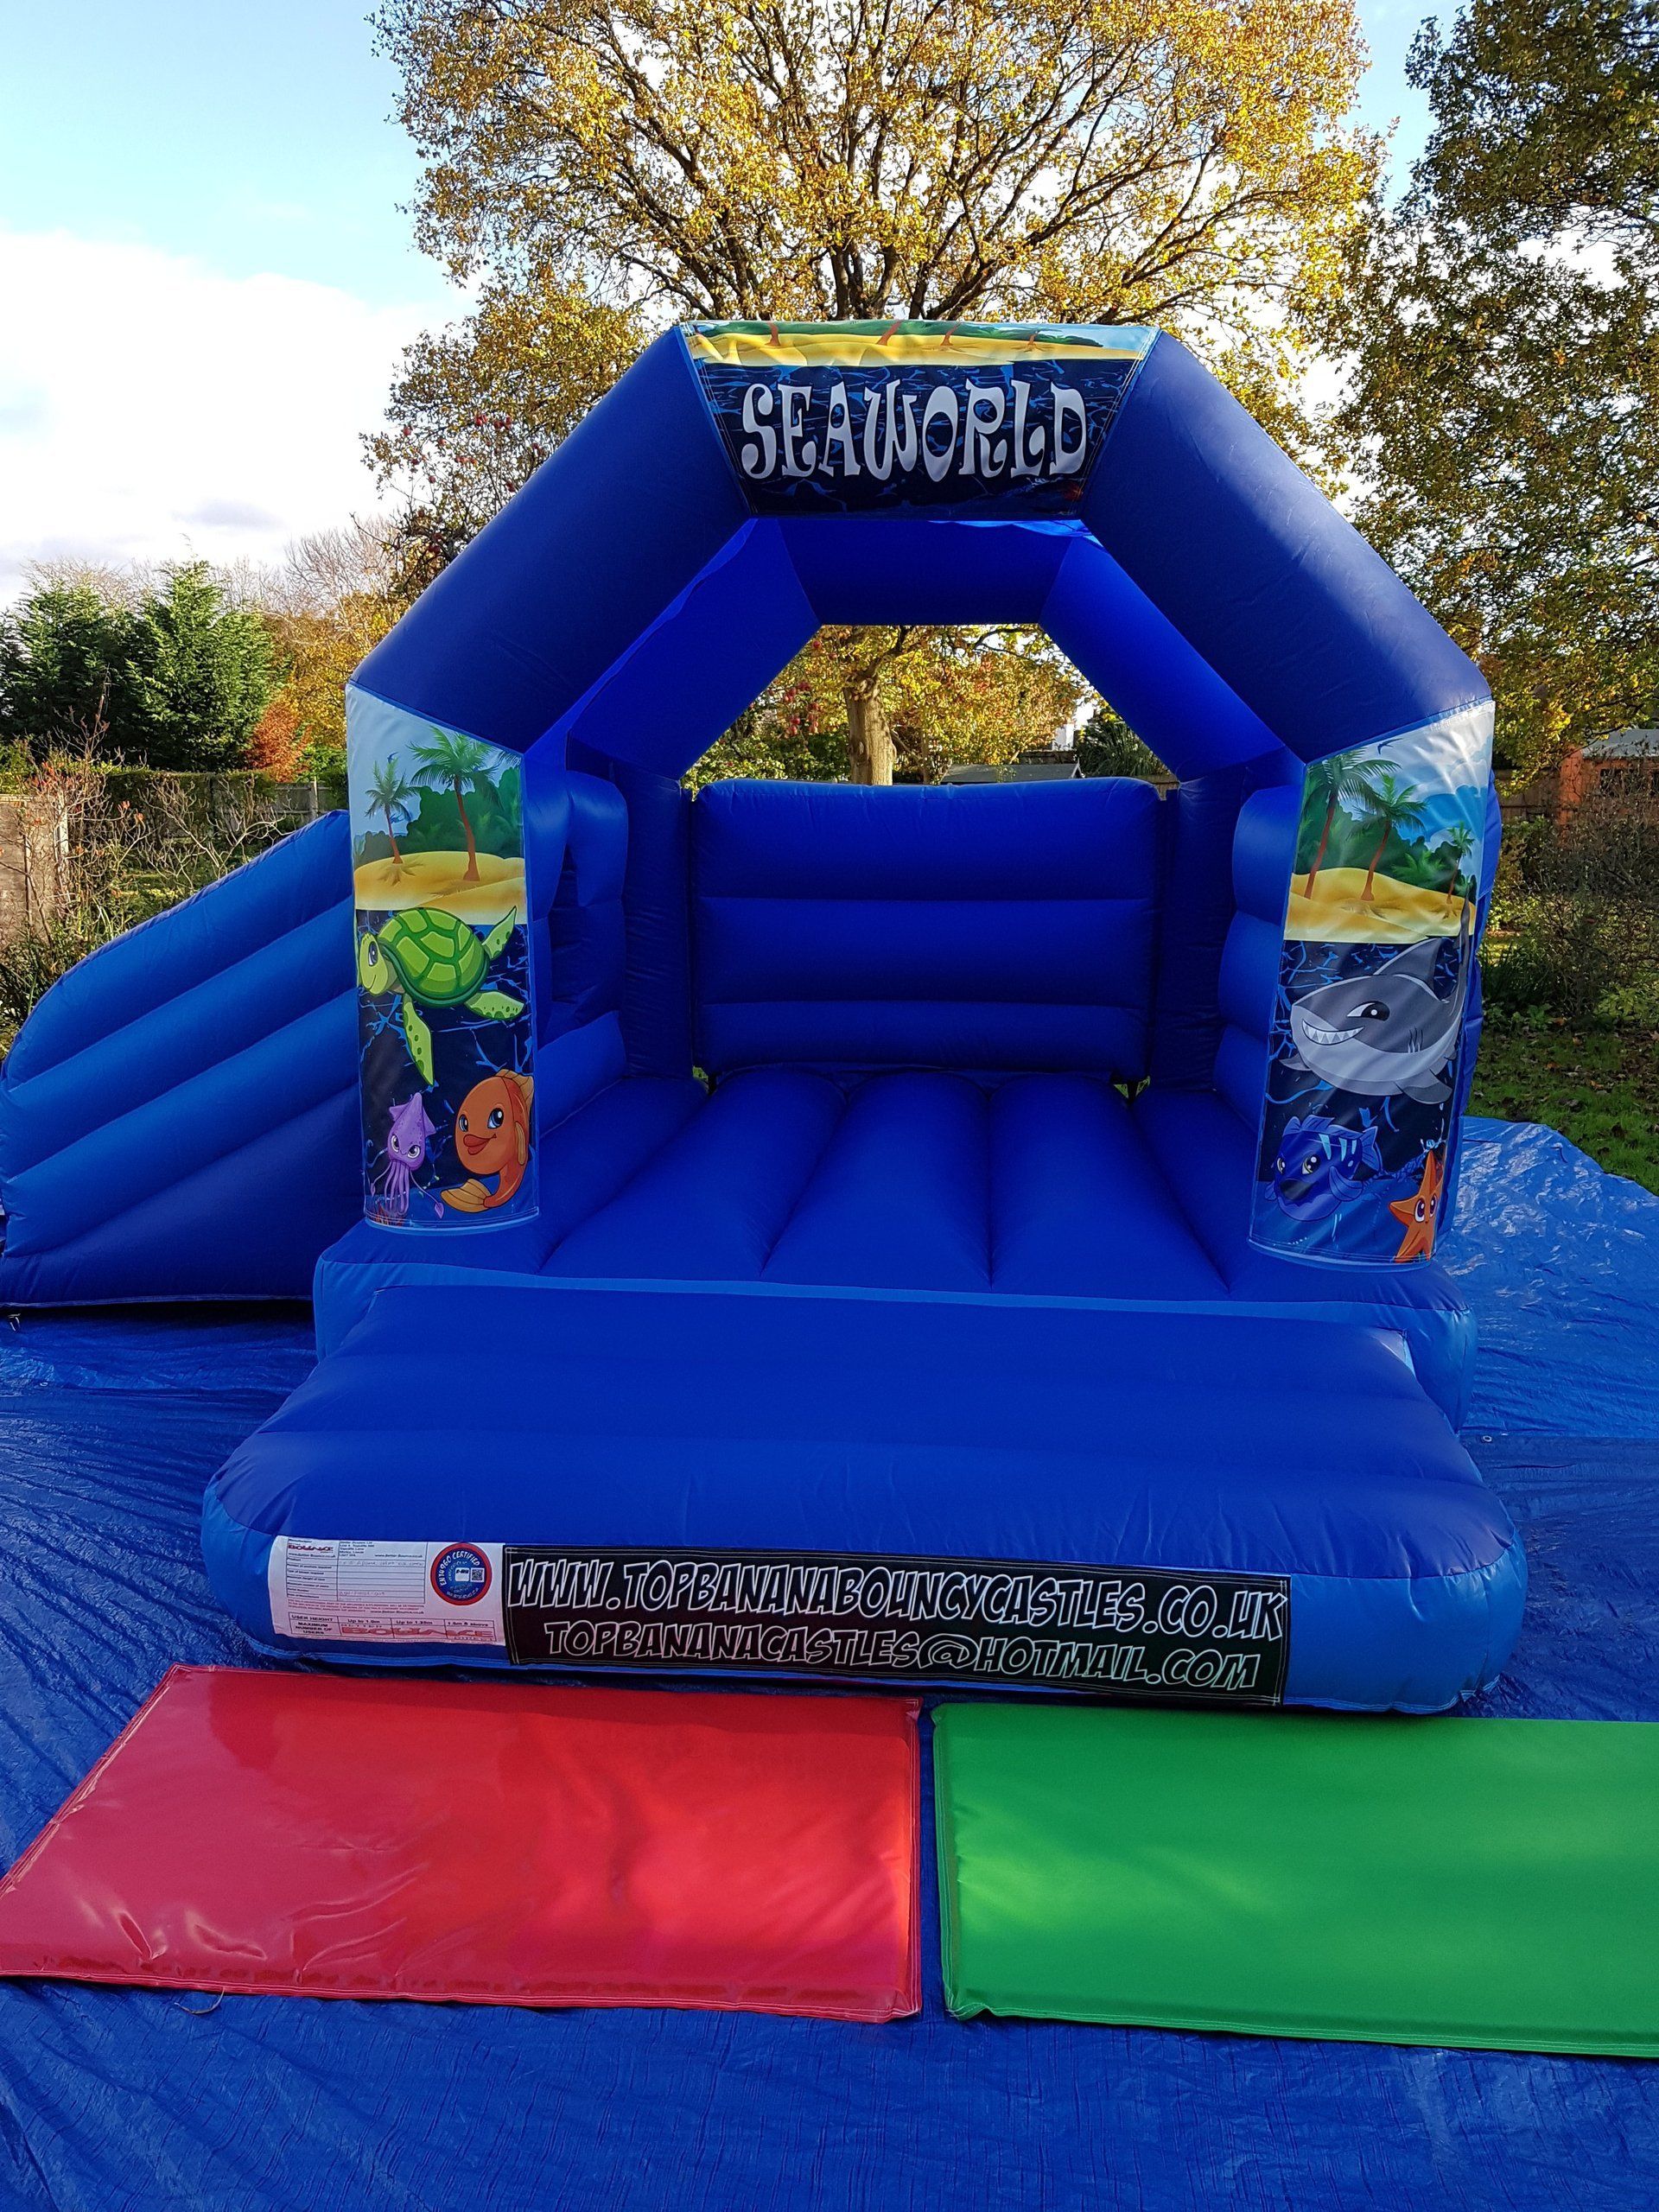 slide combo bouncy castle with seaworld theme